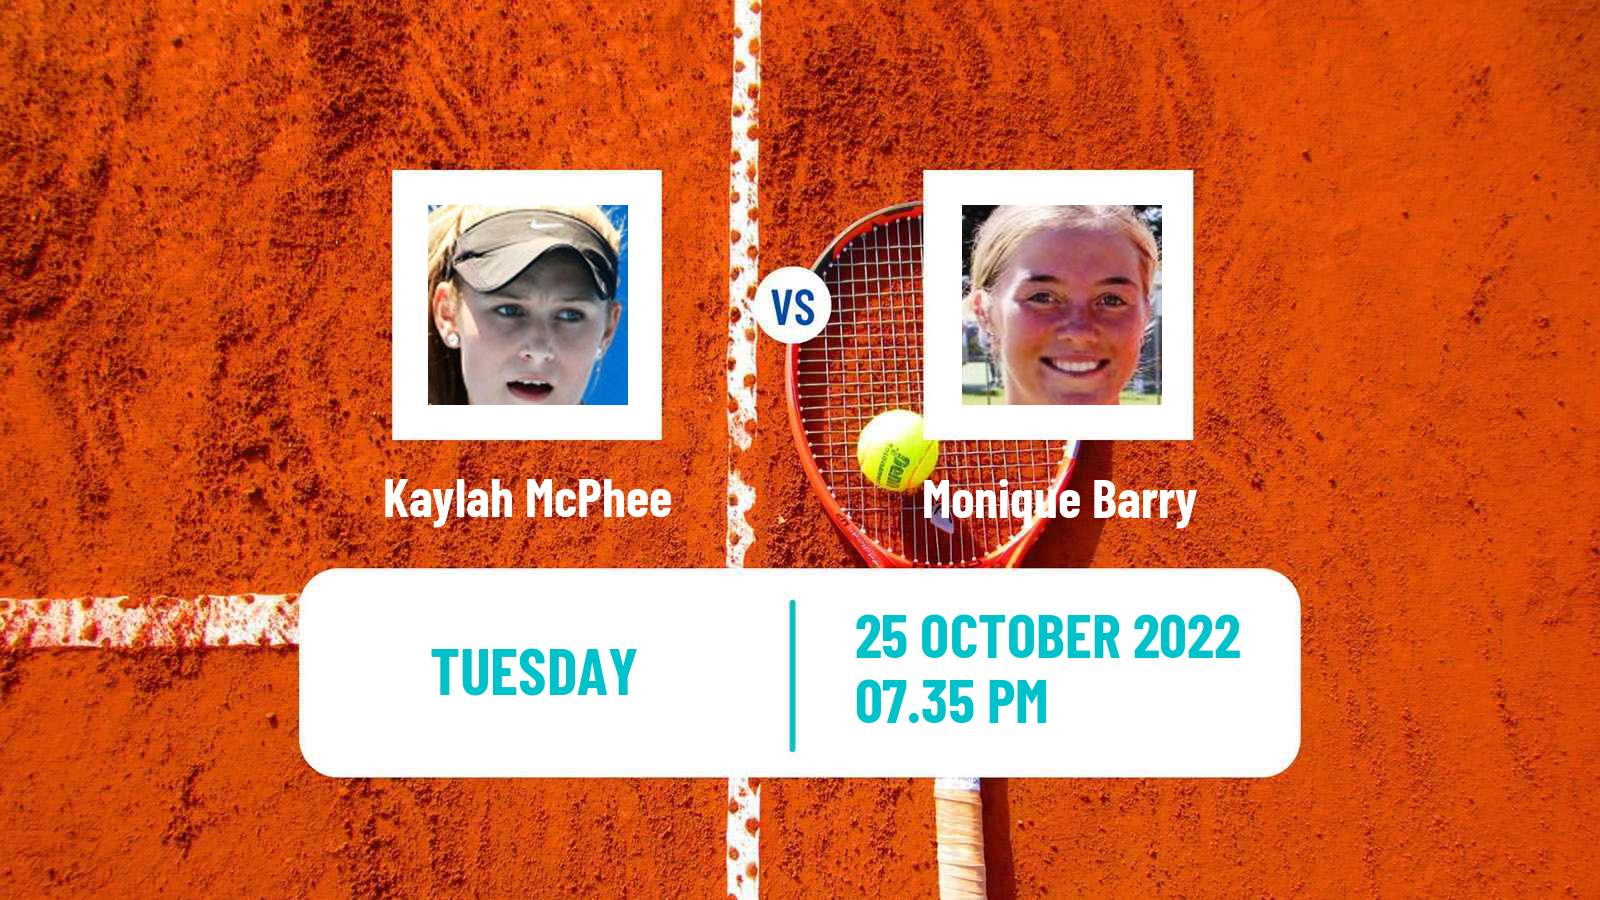 Tennis ITF Tournaments Kaylah McPhee - Monique Barry